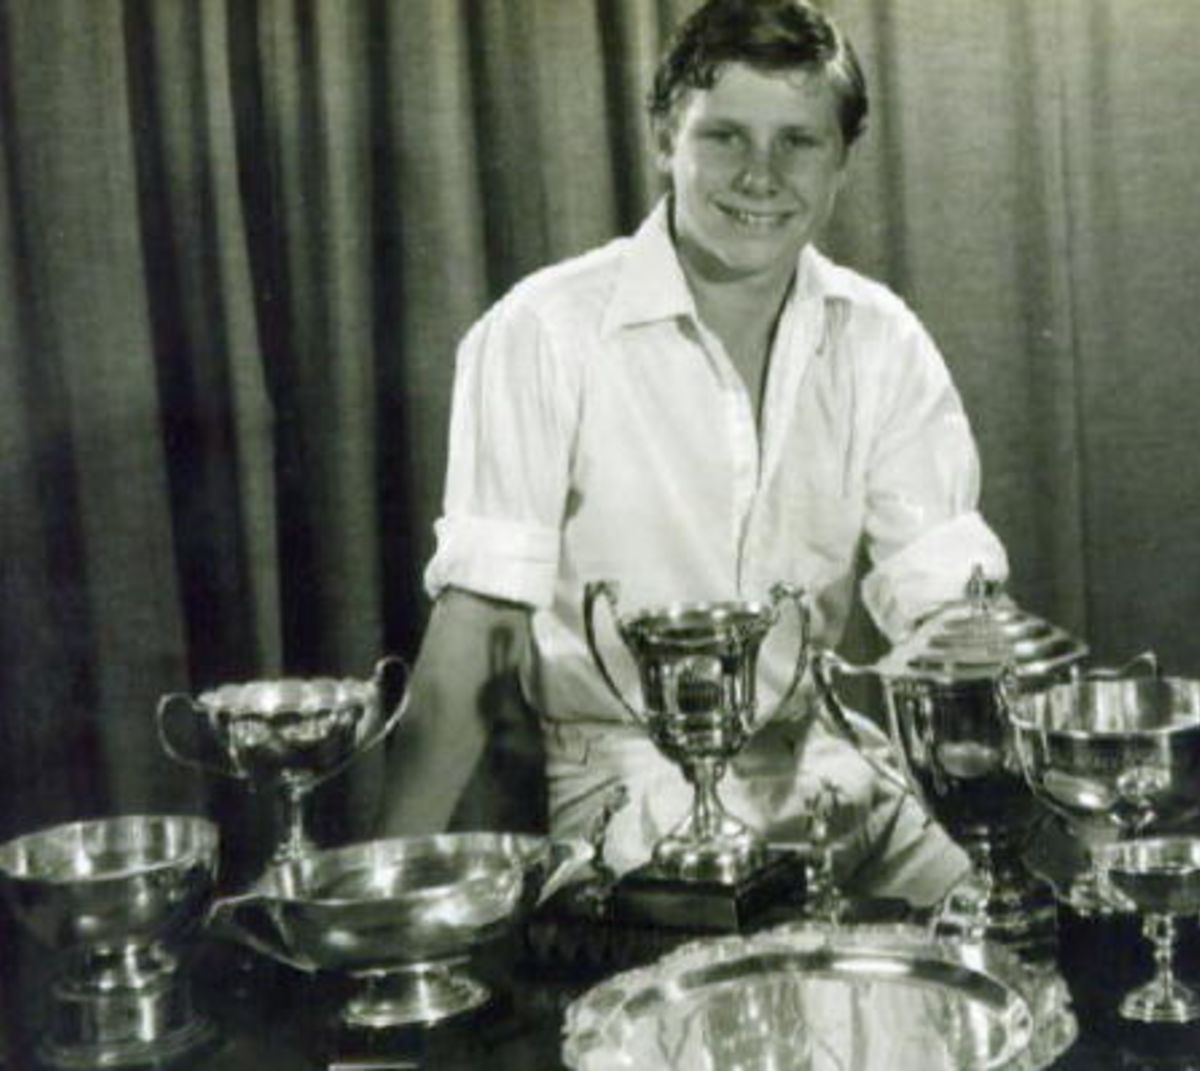 Champion of many sports at 15, plus Victor Ludorum winner